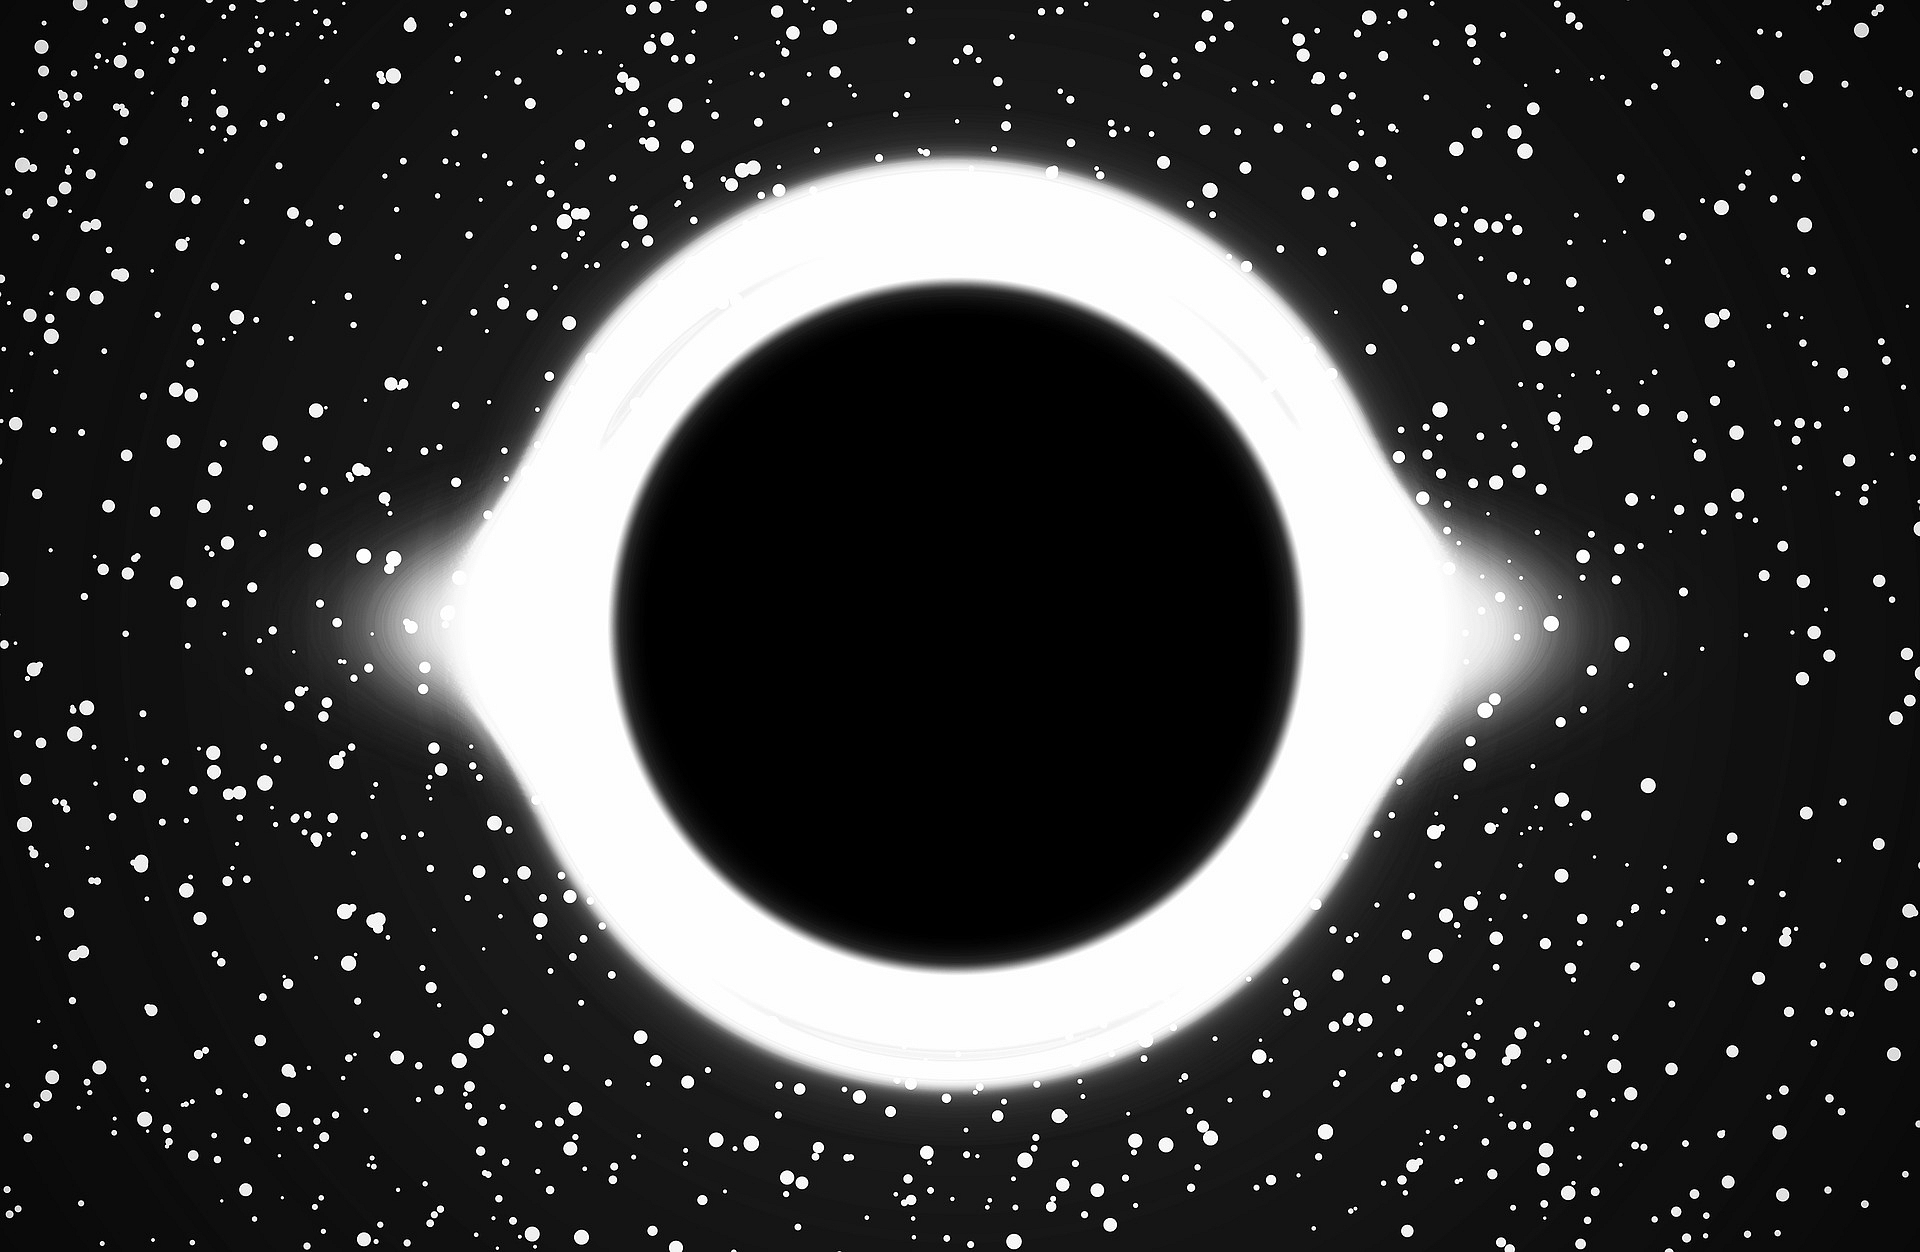 New development in black hole physics